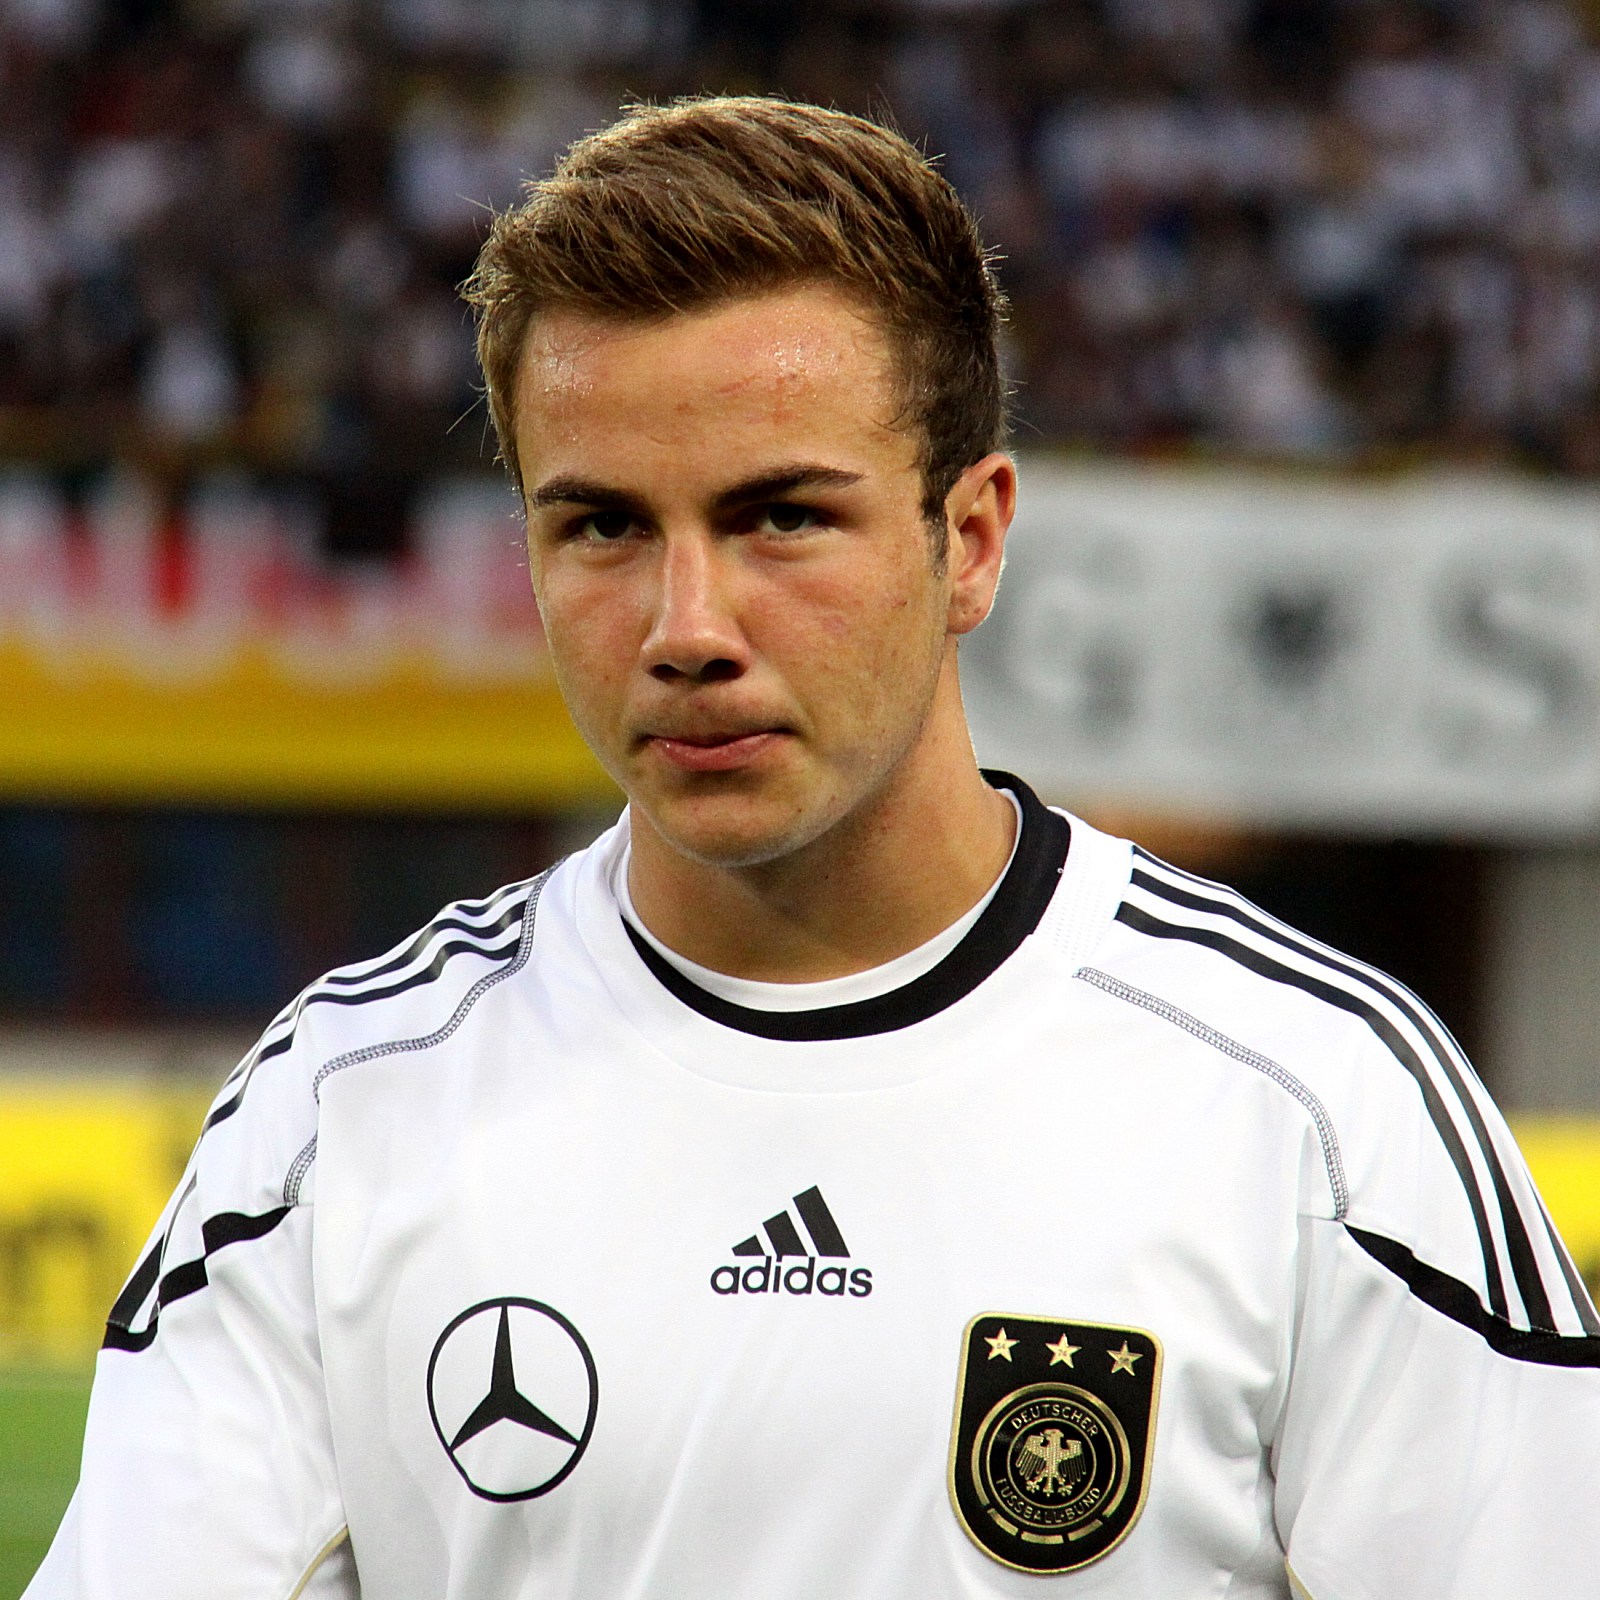 Mario_Götze,_Germany_national_football_team_(06)